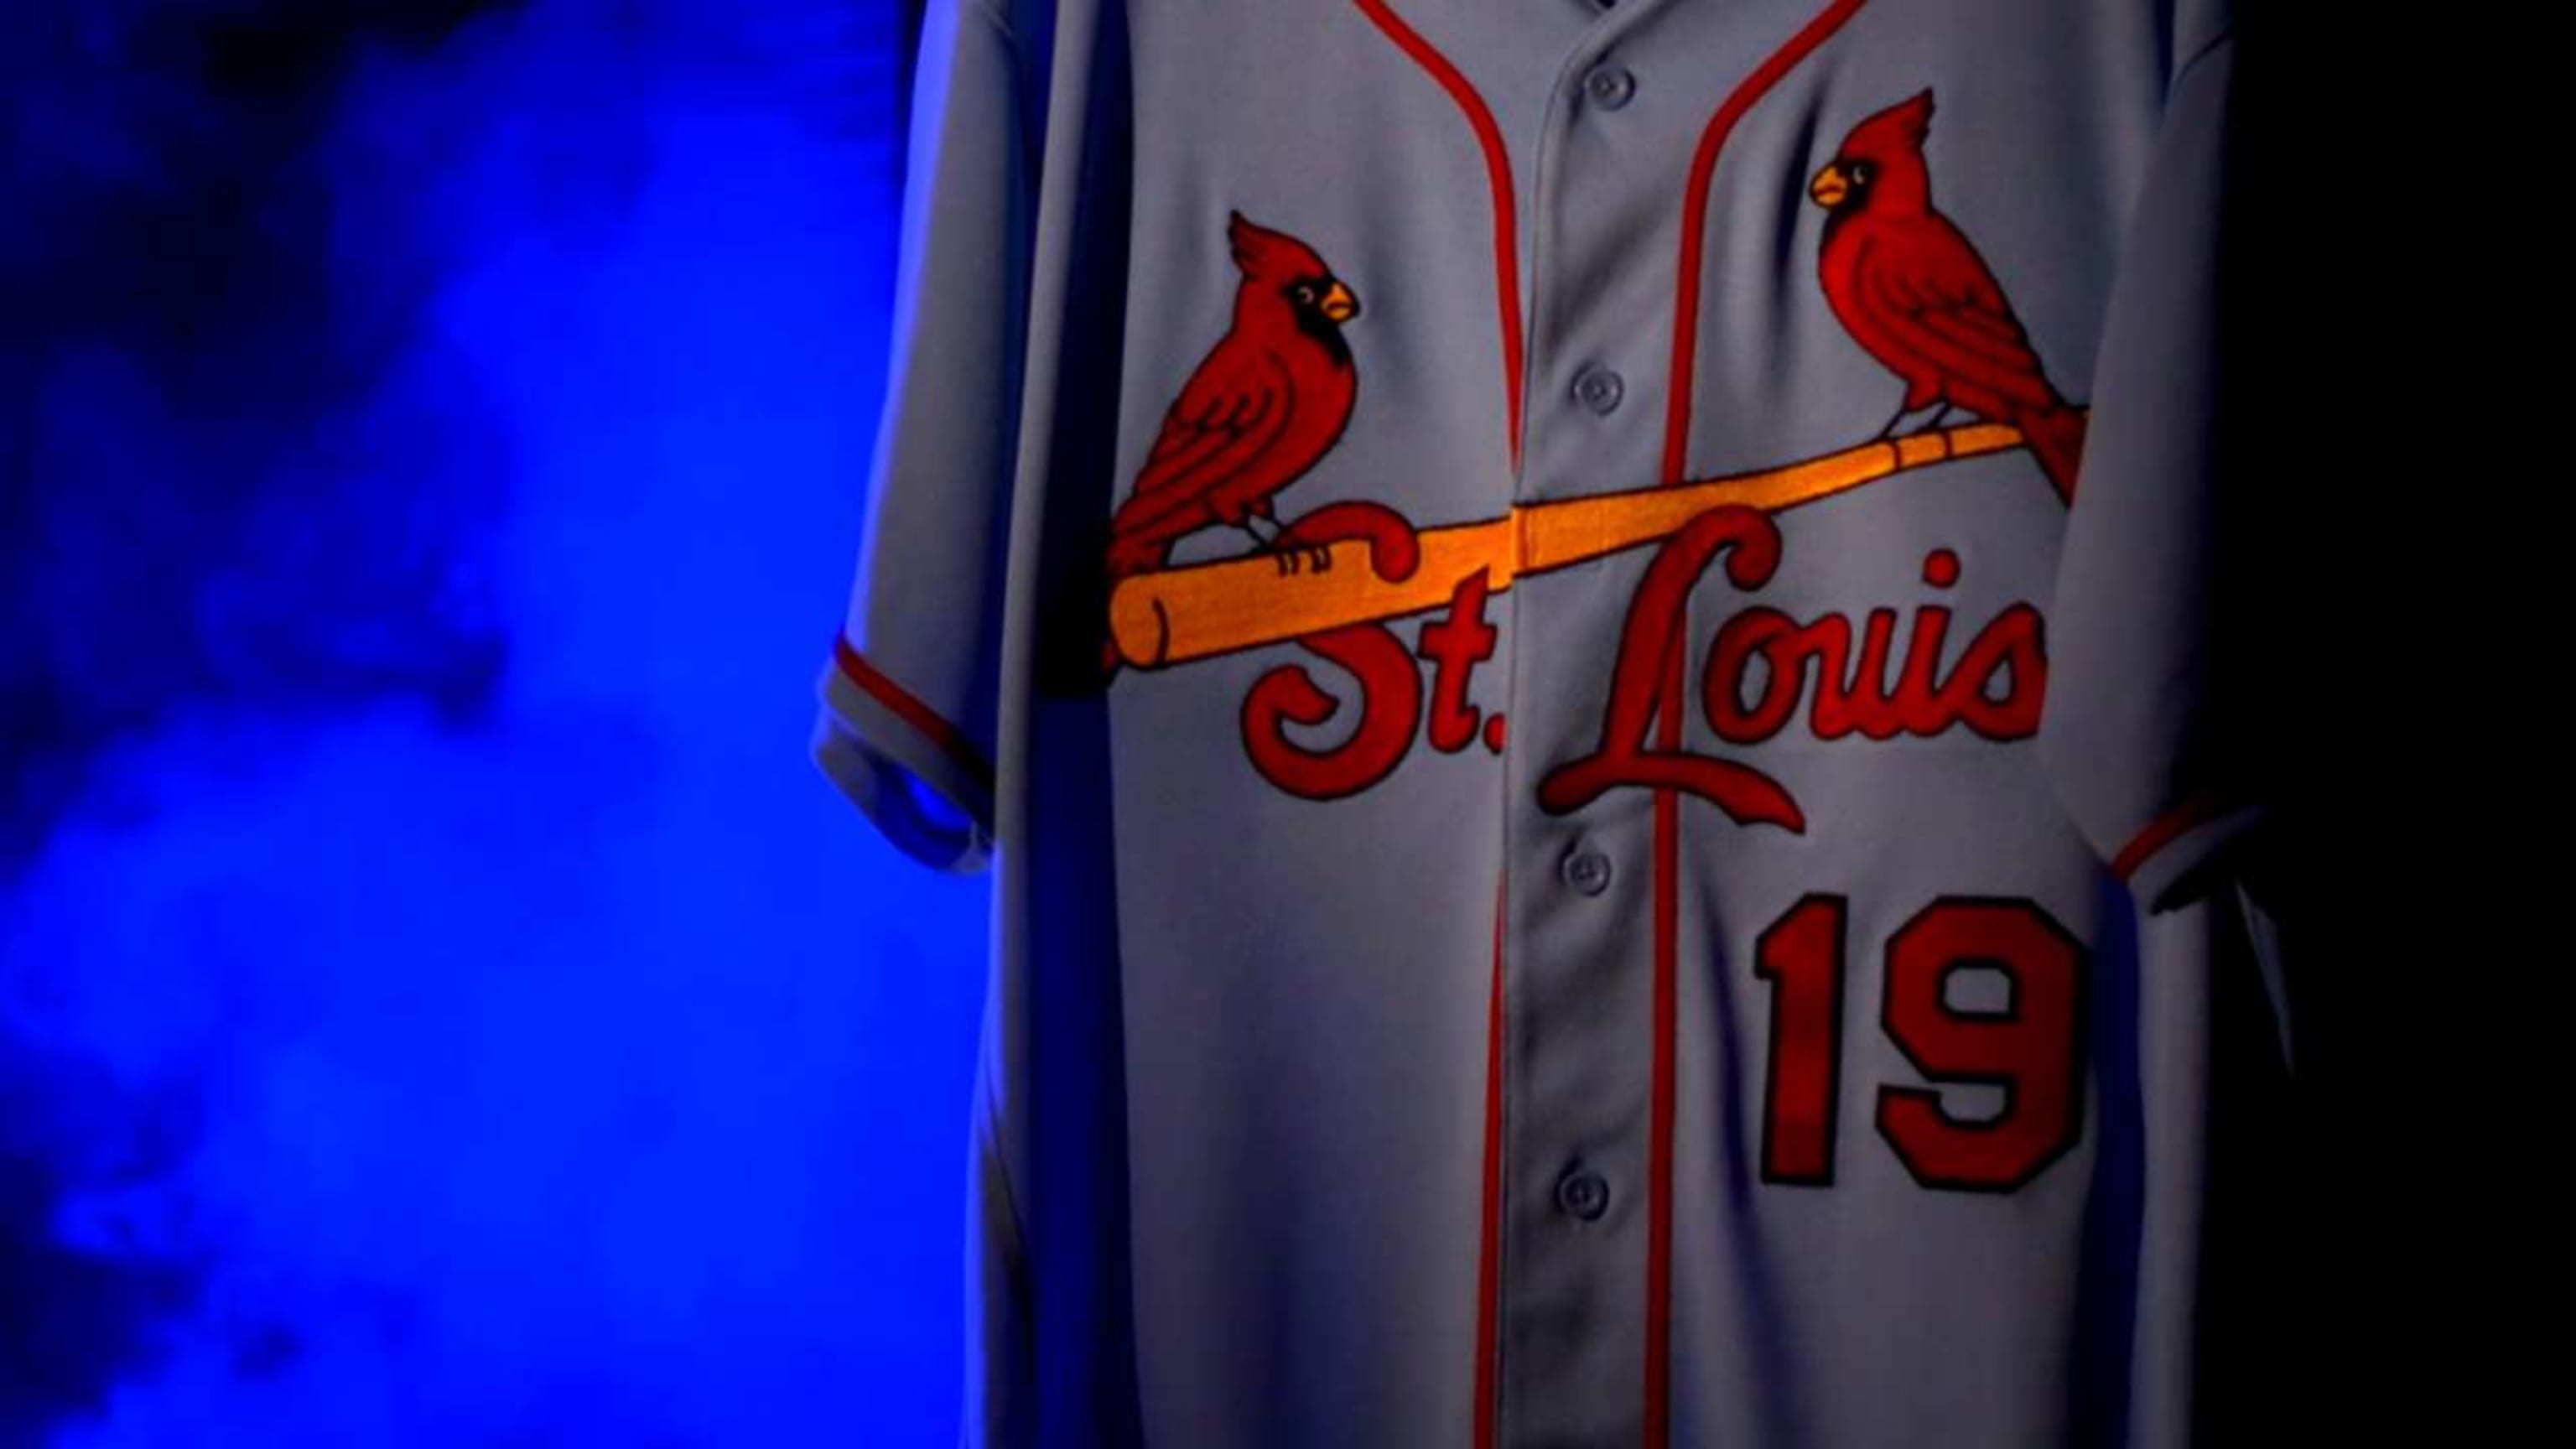 cardinals alternate jersey